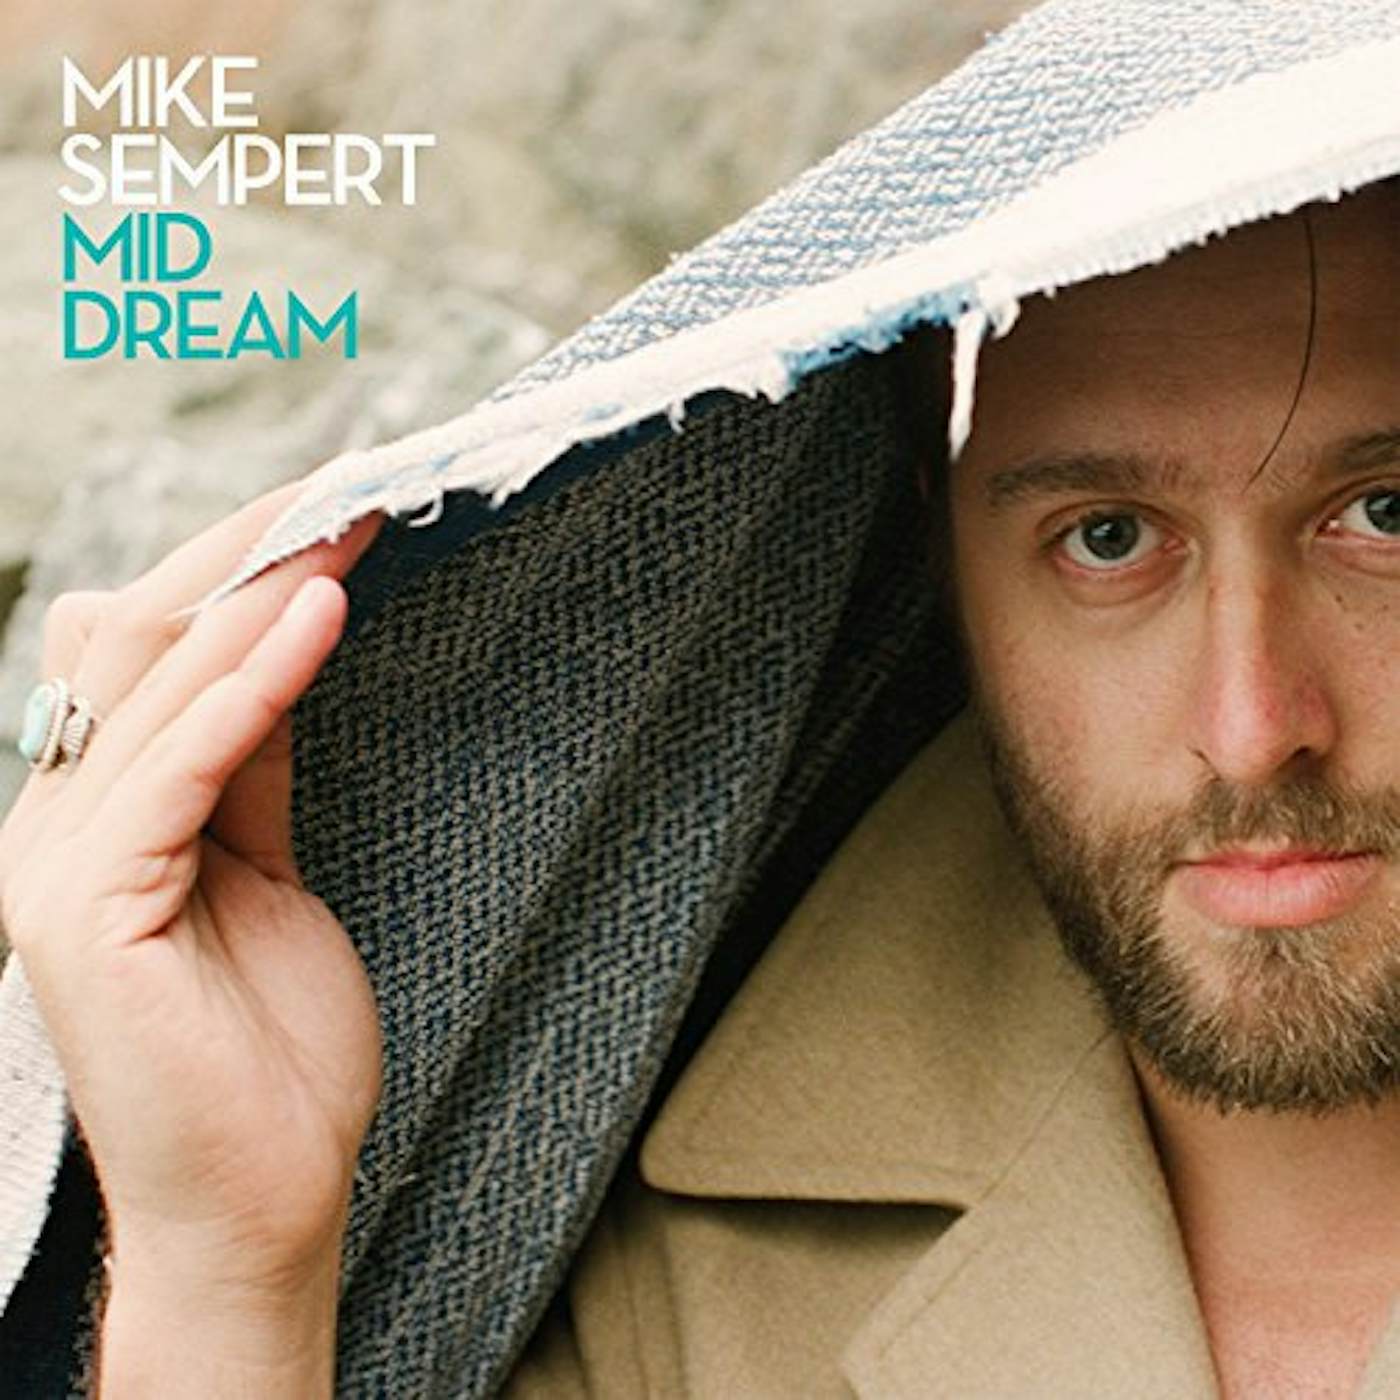 Mike Sempert Mid Dream Vinyl Record